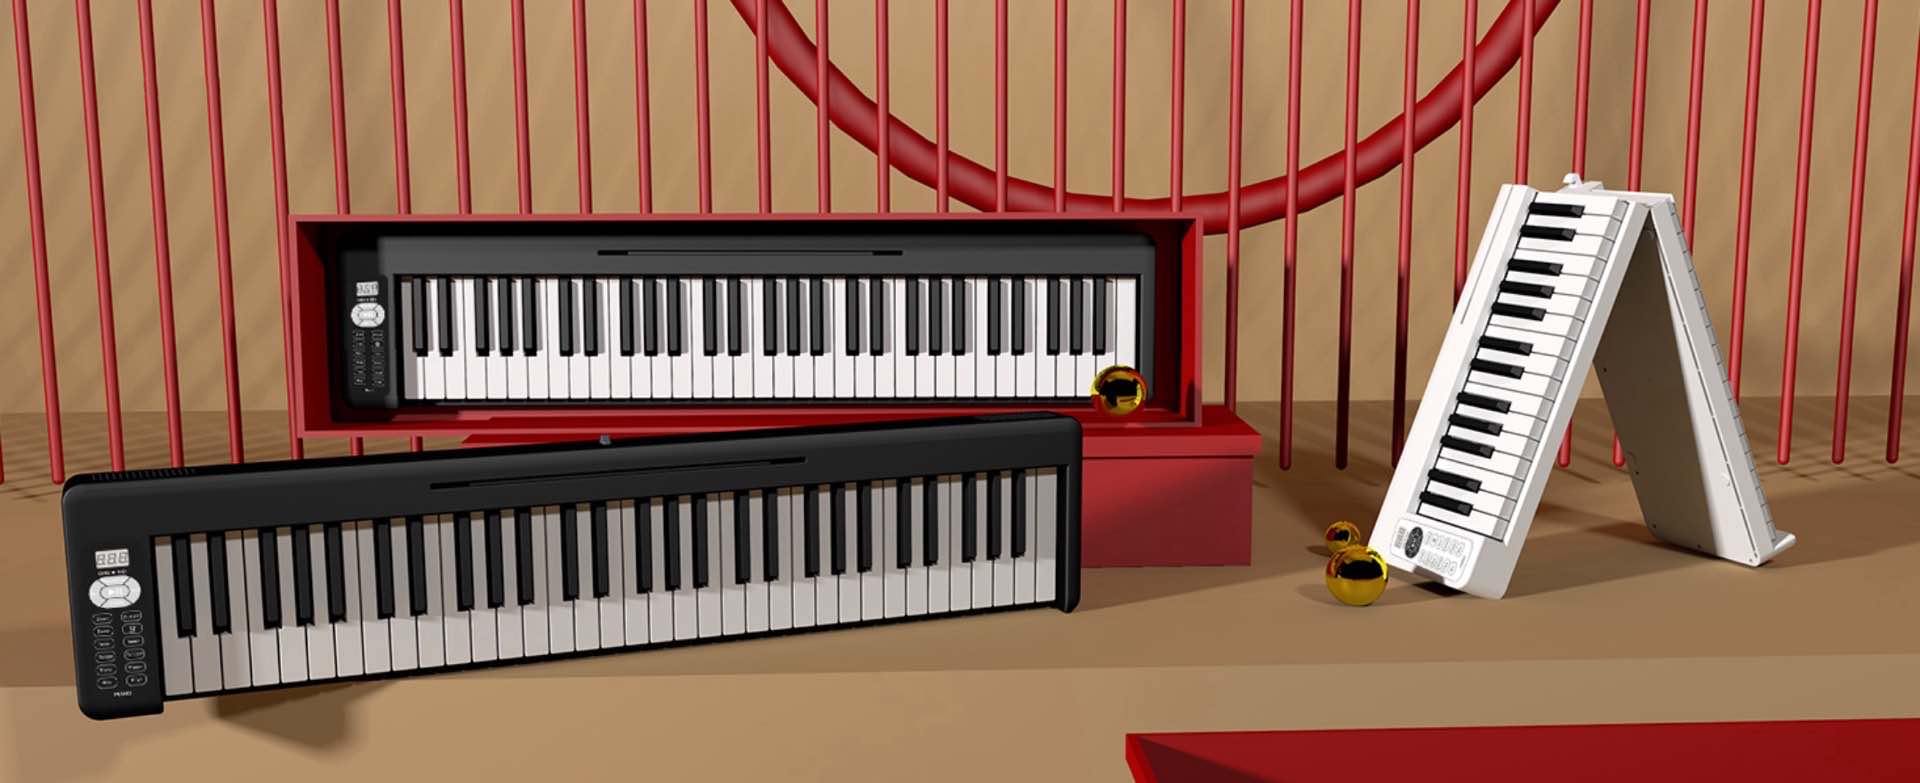 finger-dance-bx11-61-key-folding-piano